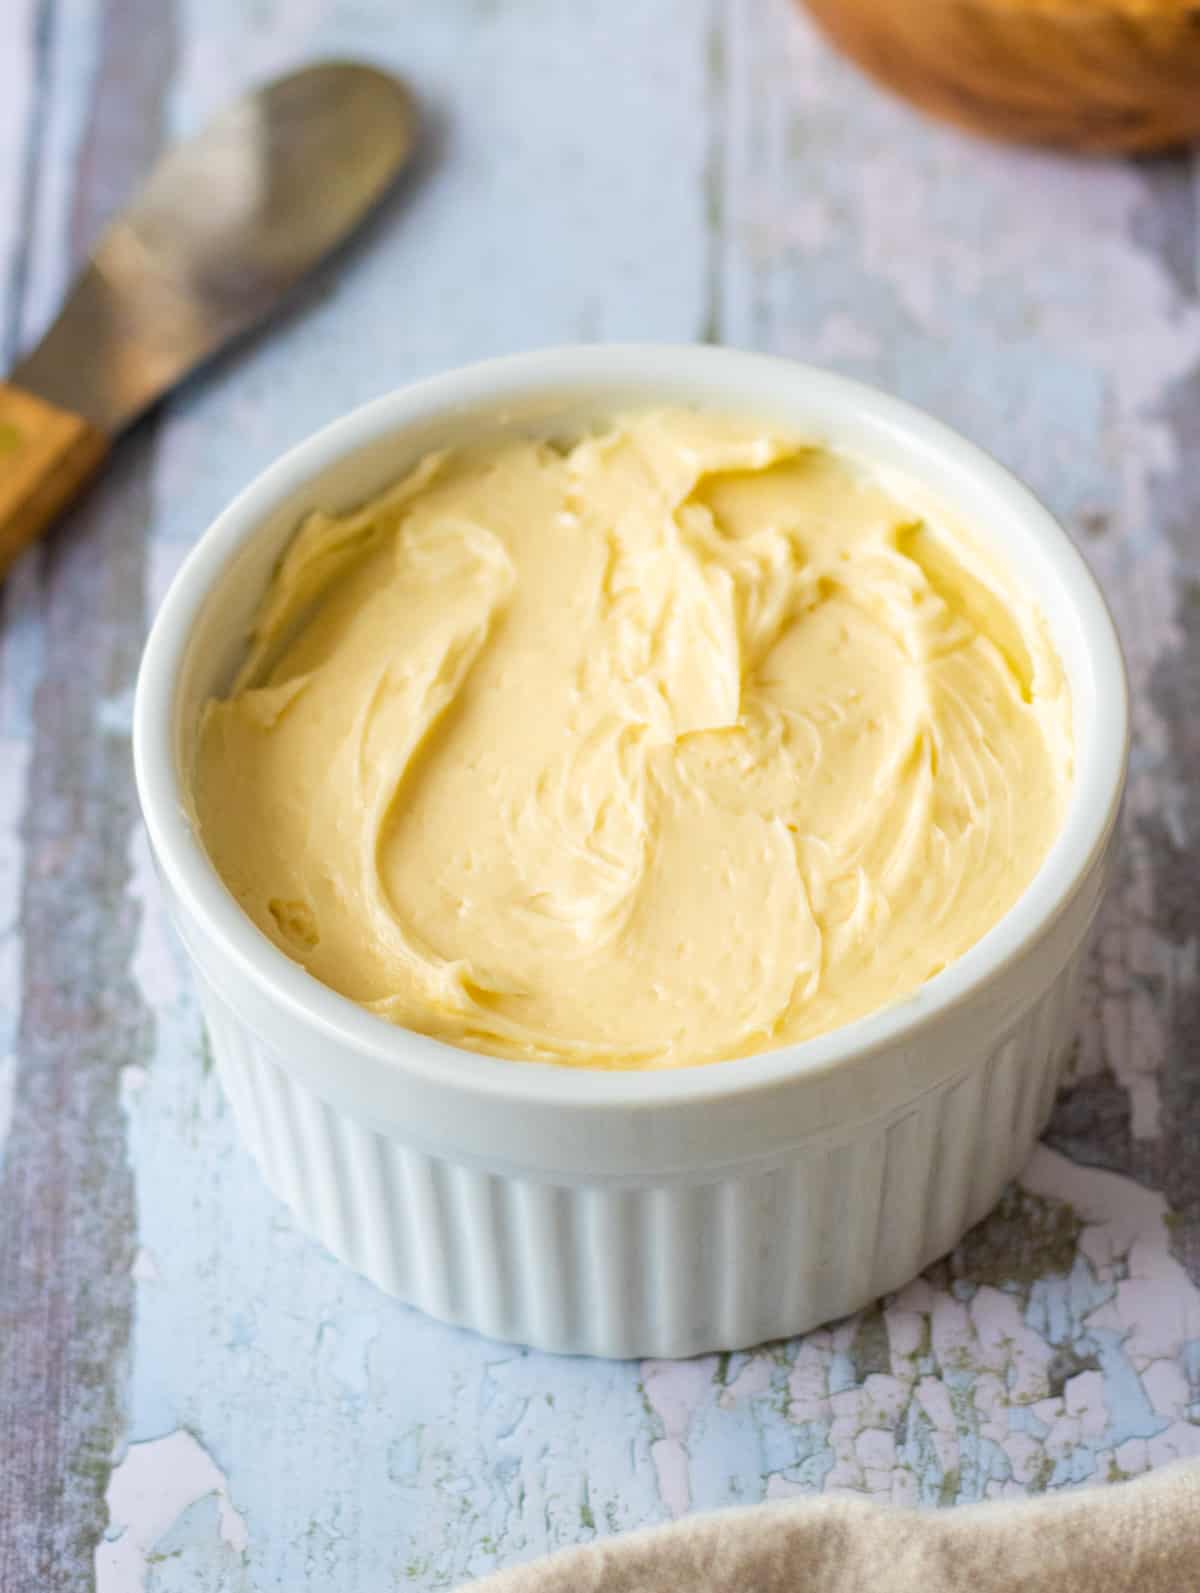 Honey butter in a bowl.